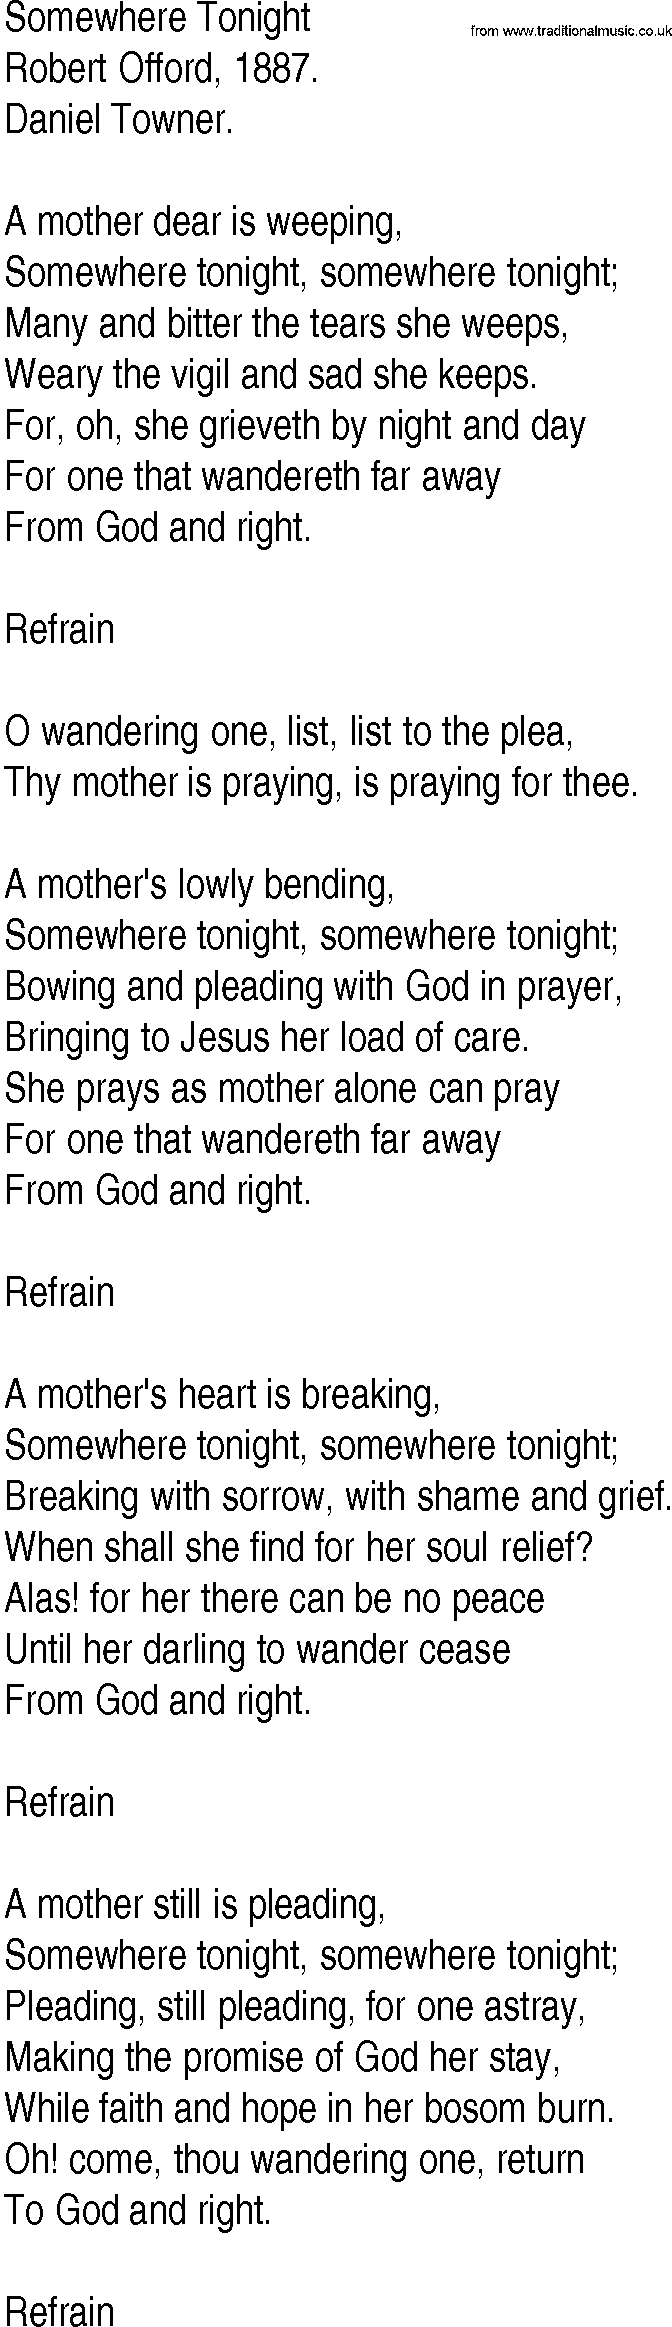 Hymn and Gospel Song: Somewhere Tonight by Robert Offord lyrics